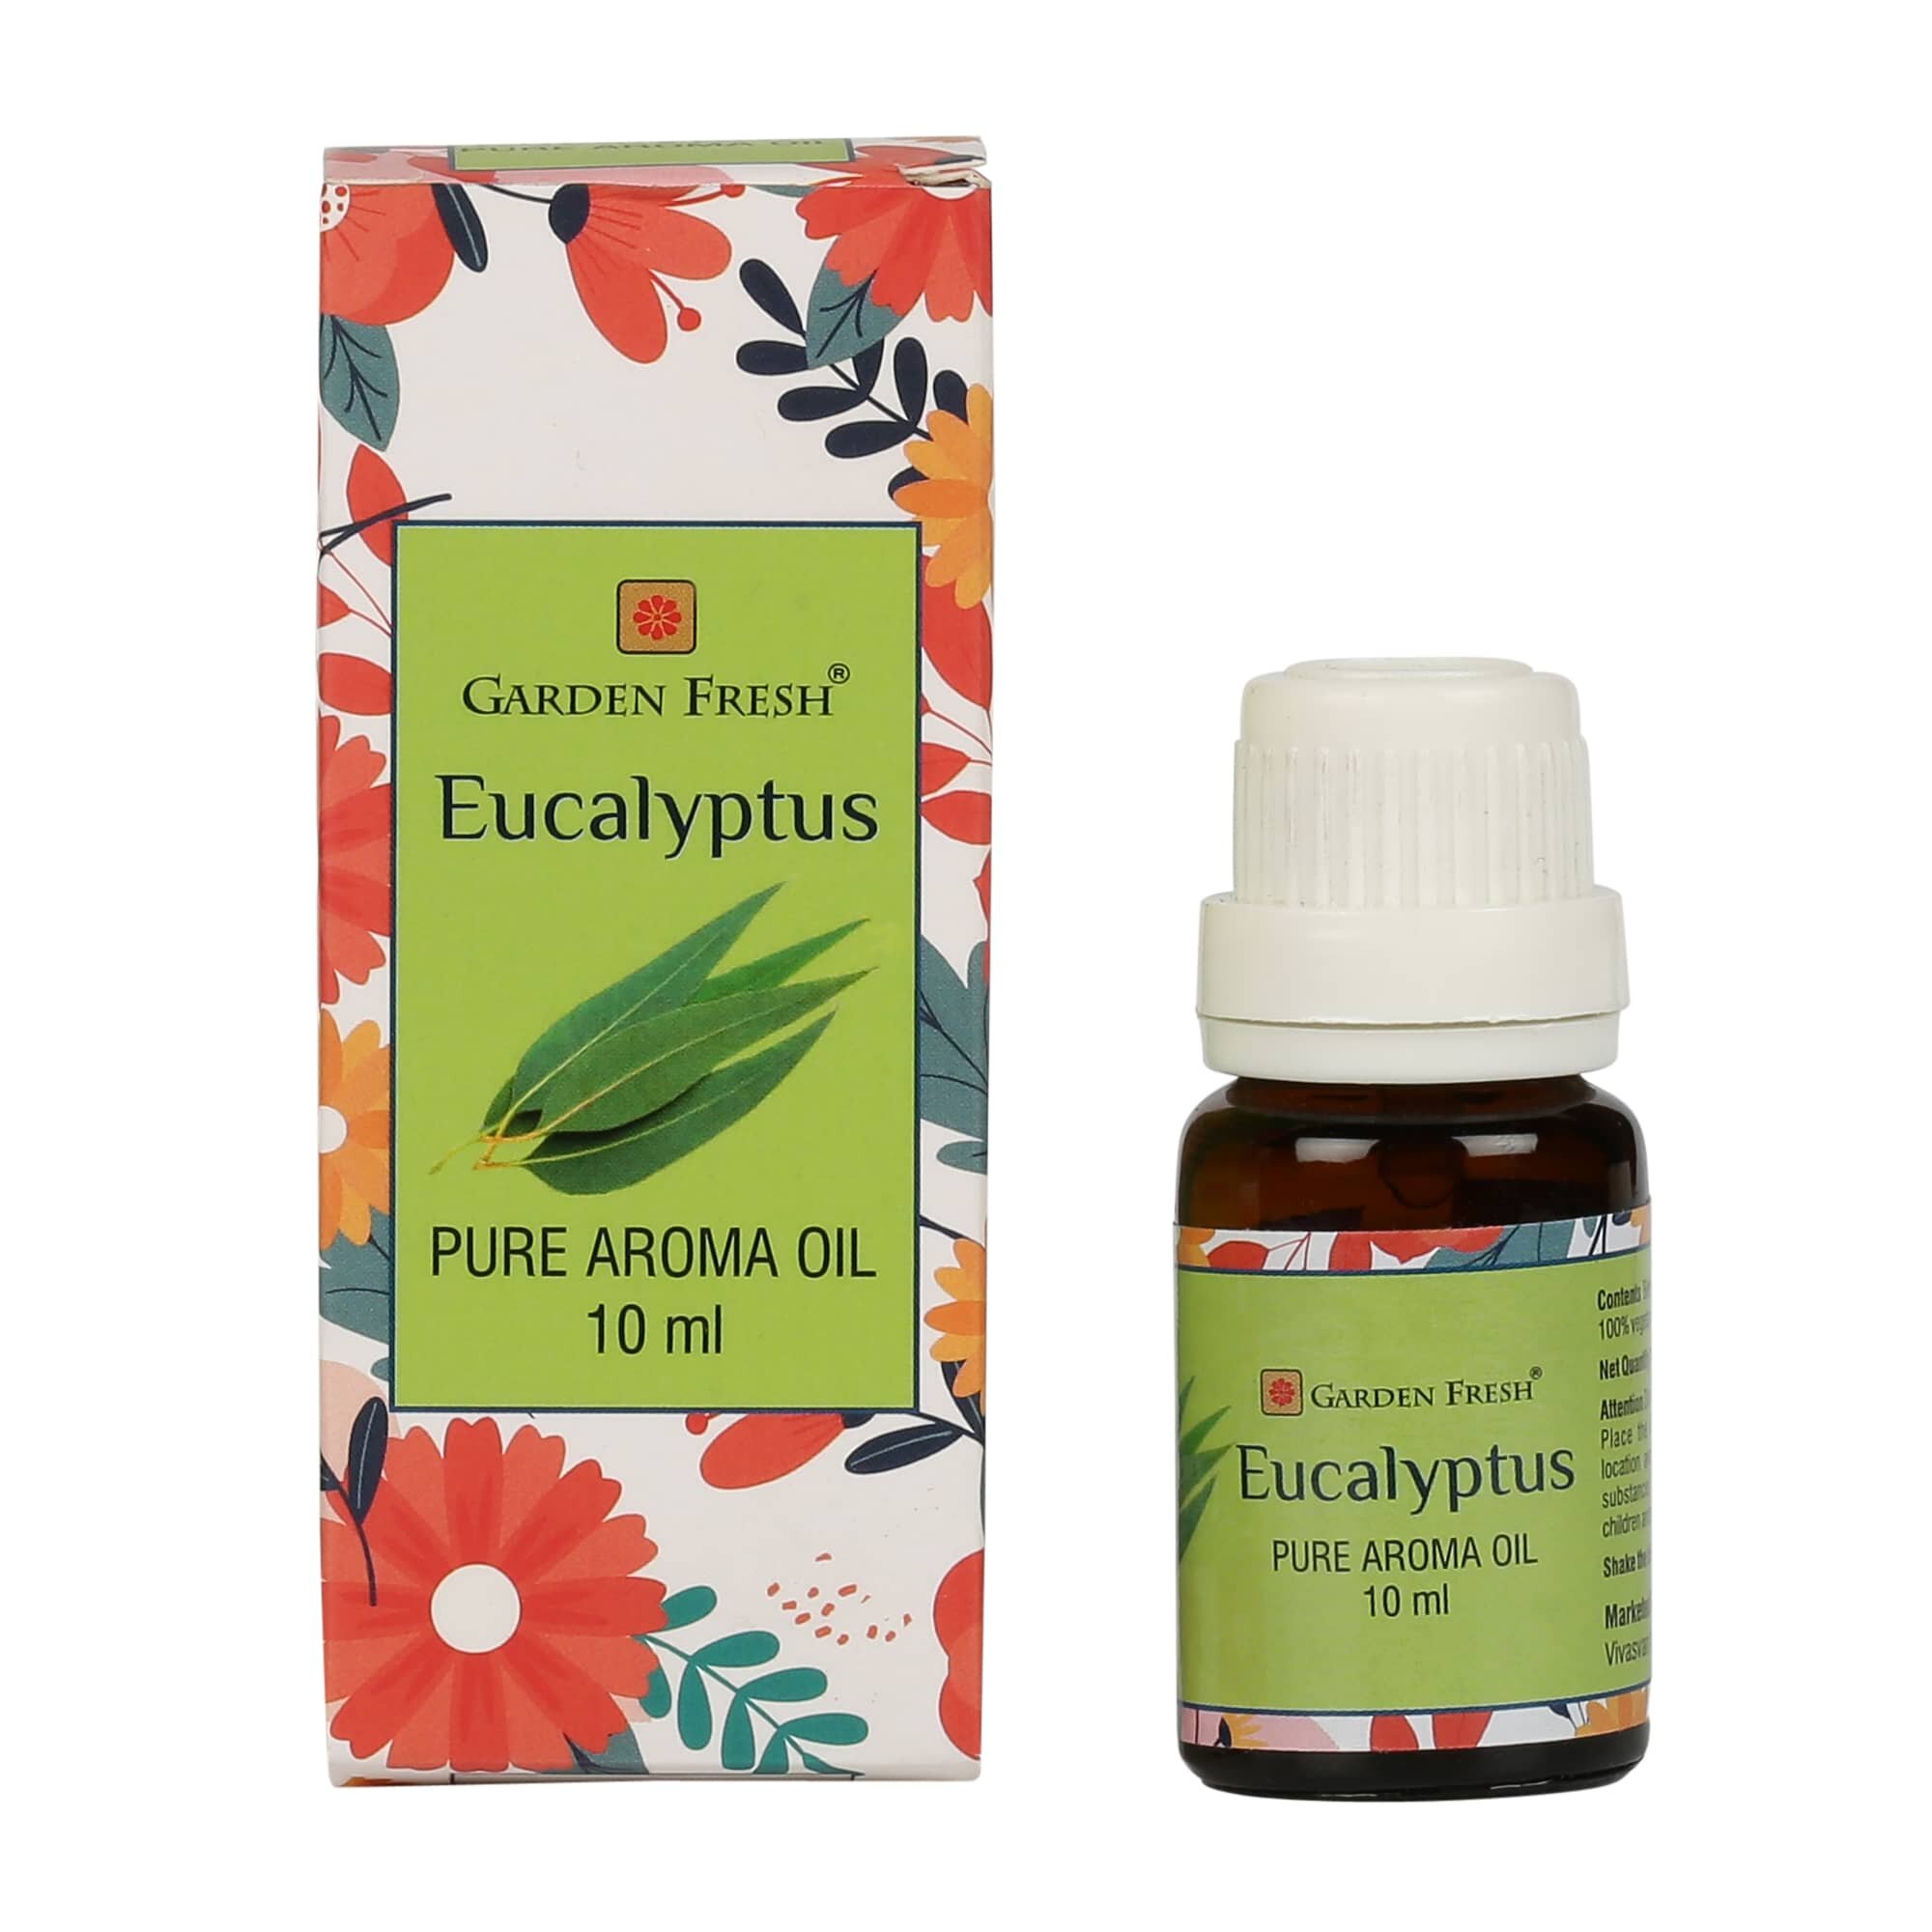 EUCALYPTUS Pure Aroma Oil, Garden Fresh (ЭВКАЛИПТ, чистое ароматическое масло, Гарден Фреш), 10 мл.